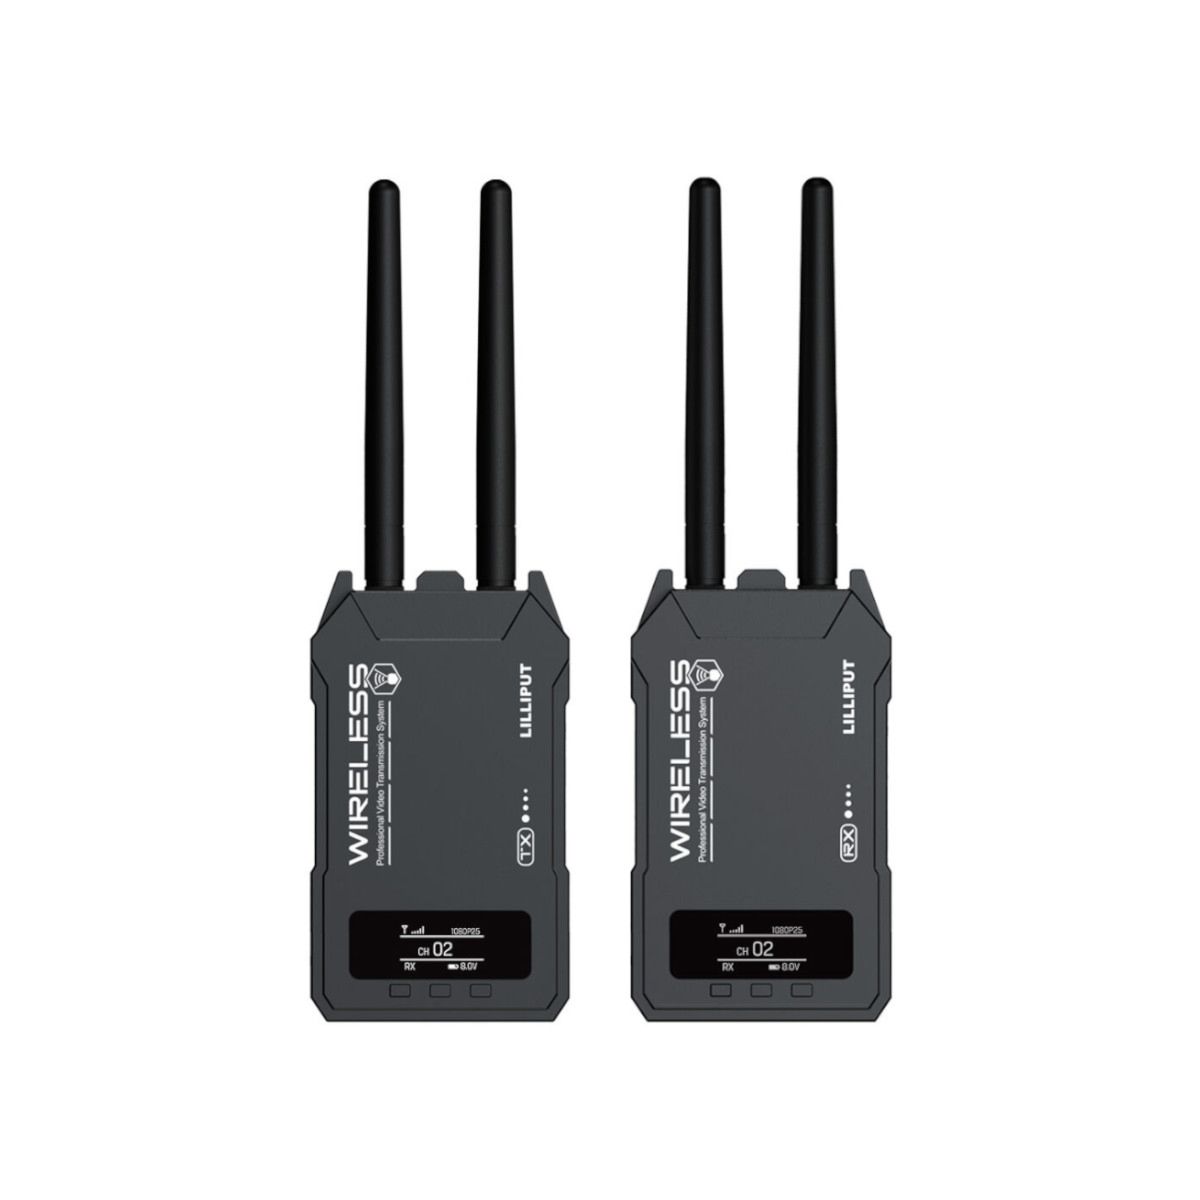 Lilliput WS500 Wireless SDI / HDMI Video Transmission System